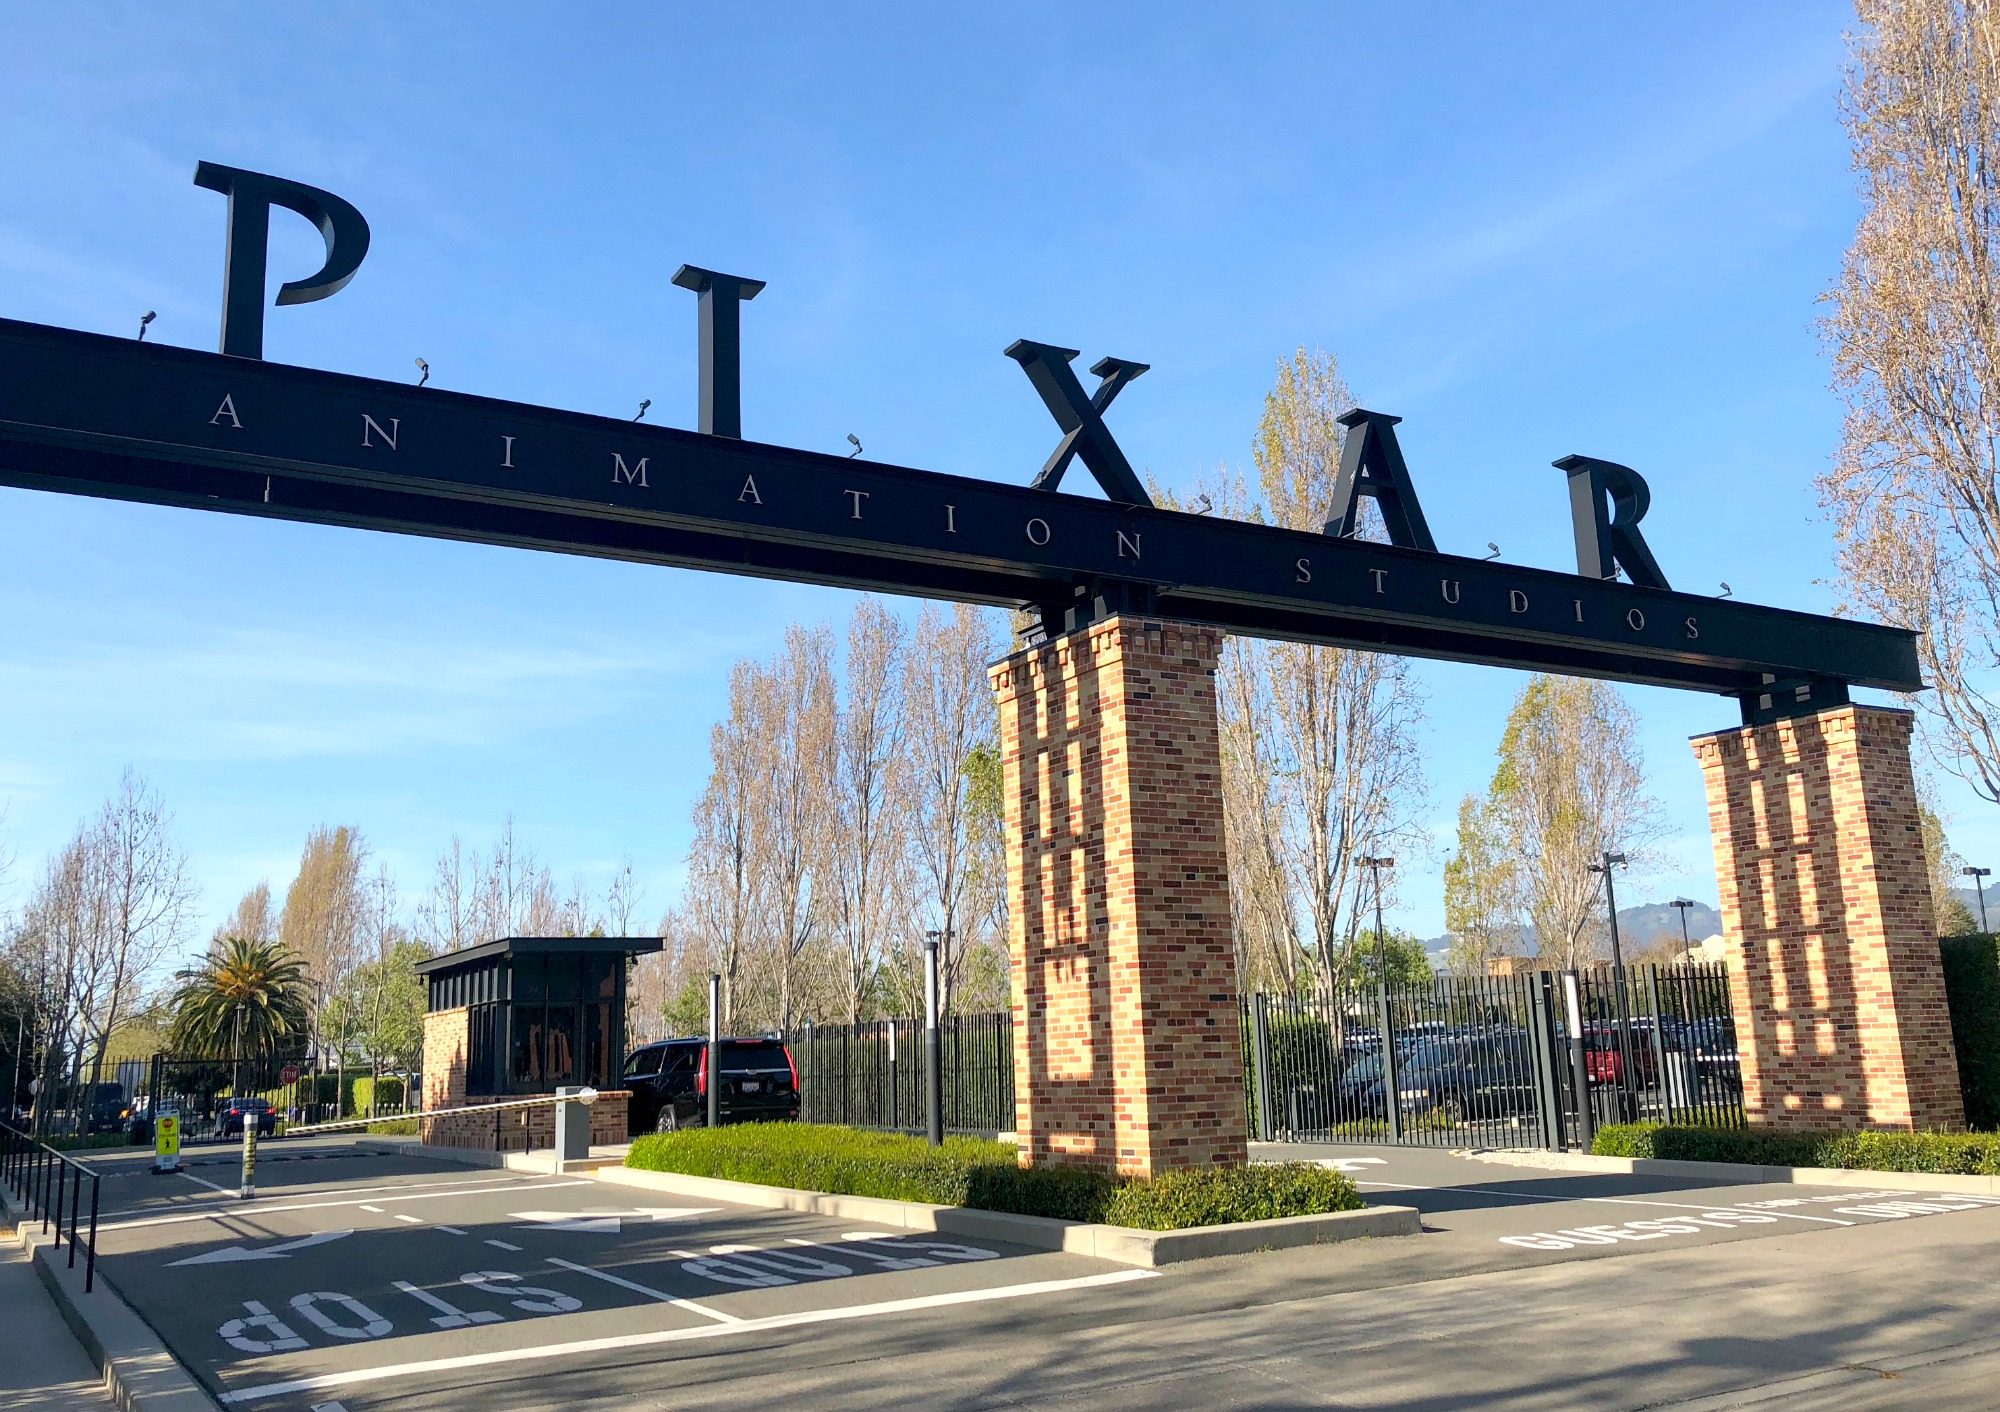 pixar movie studio tours